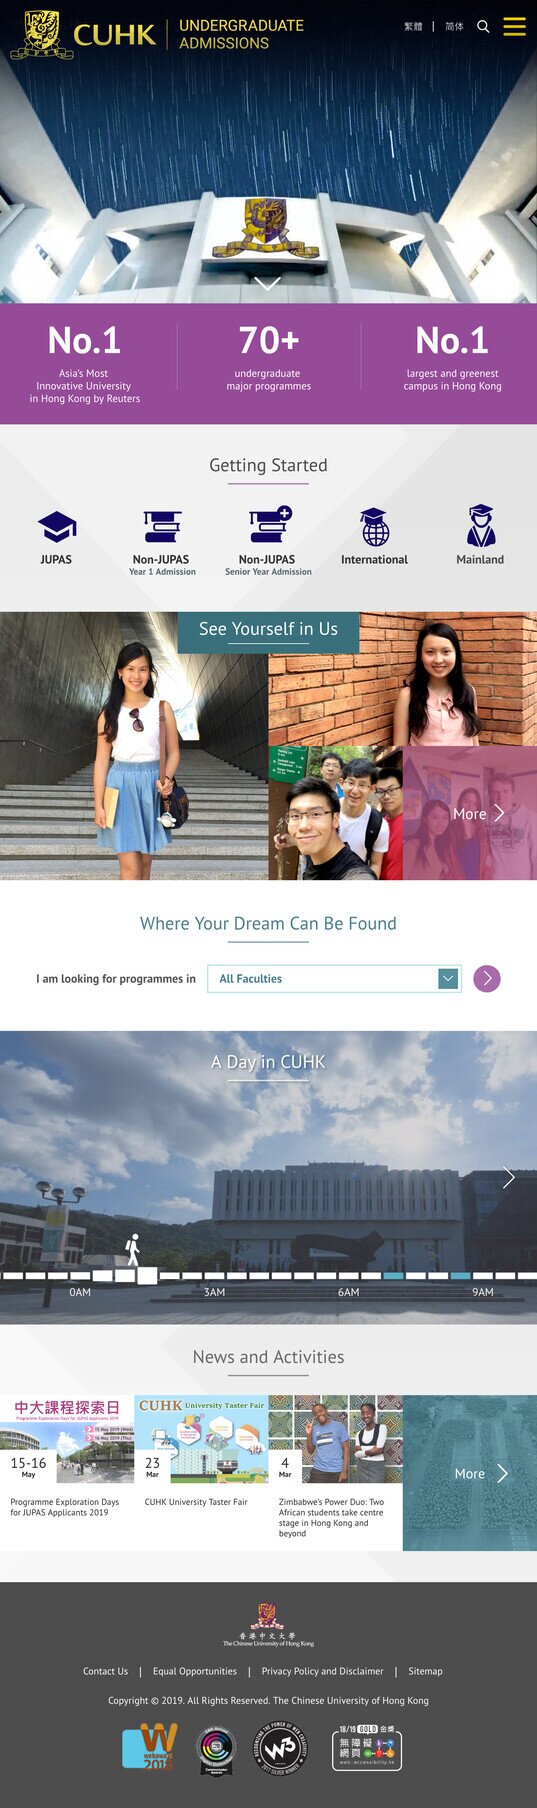 Chinese University of Hong Kong website screenshot for tablet version 1 of 5